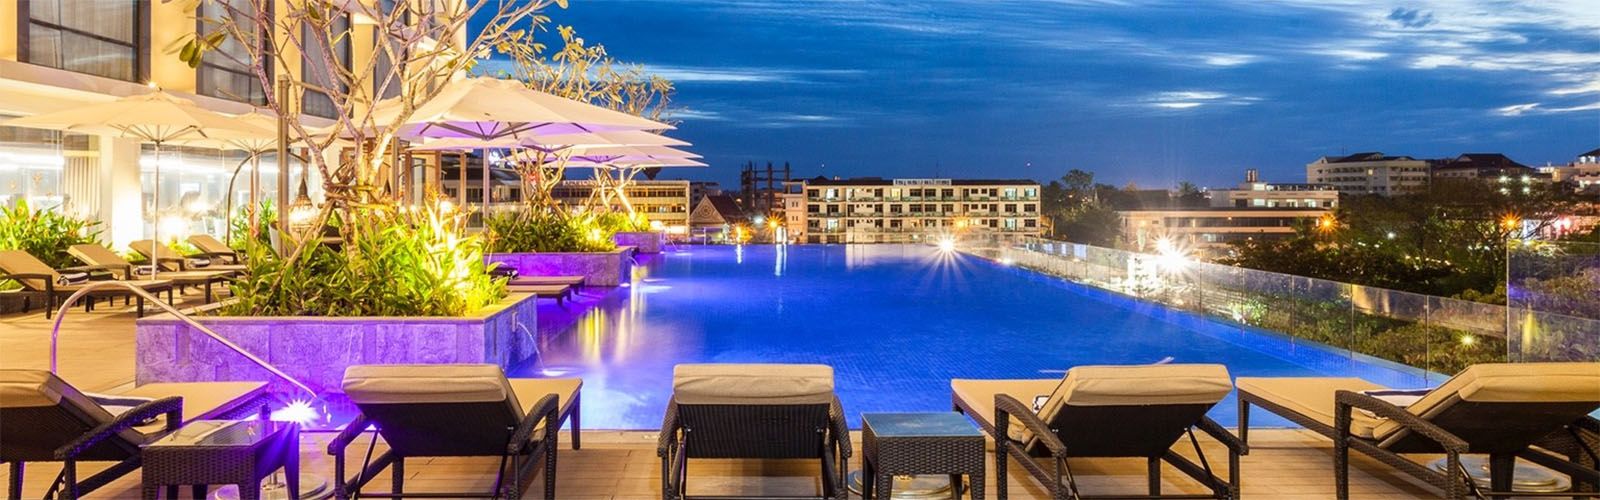 Best Luxury Hotels In Vientiane, Laos | best place | Asianventure Tours